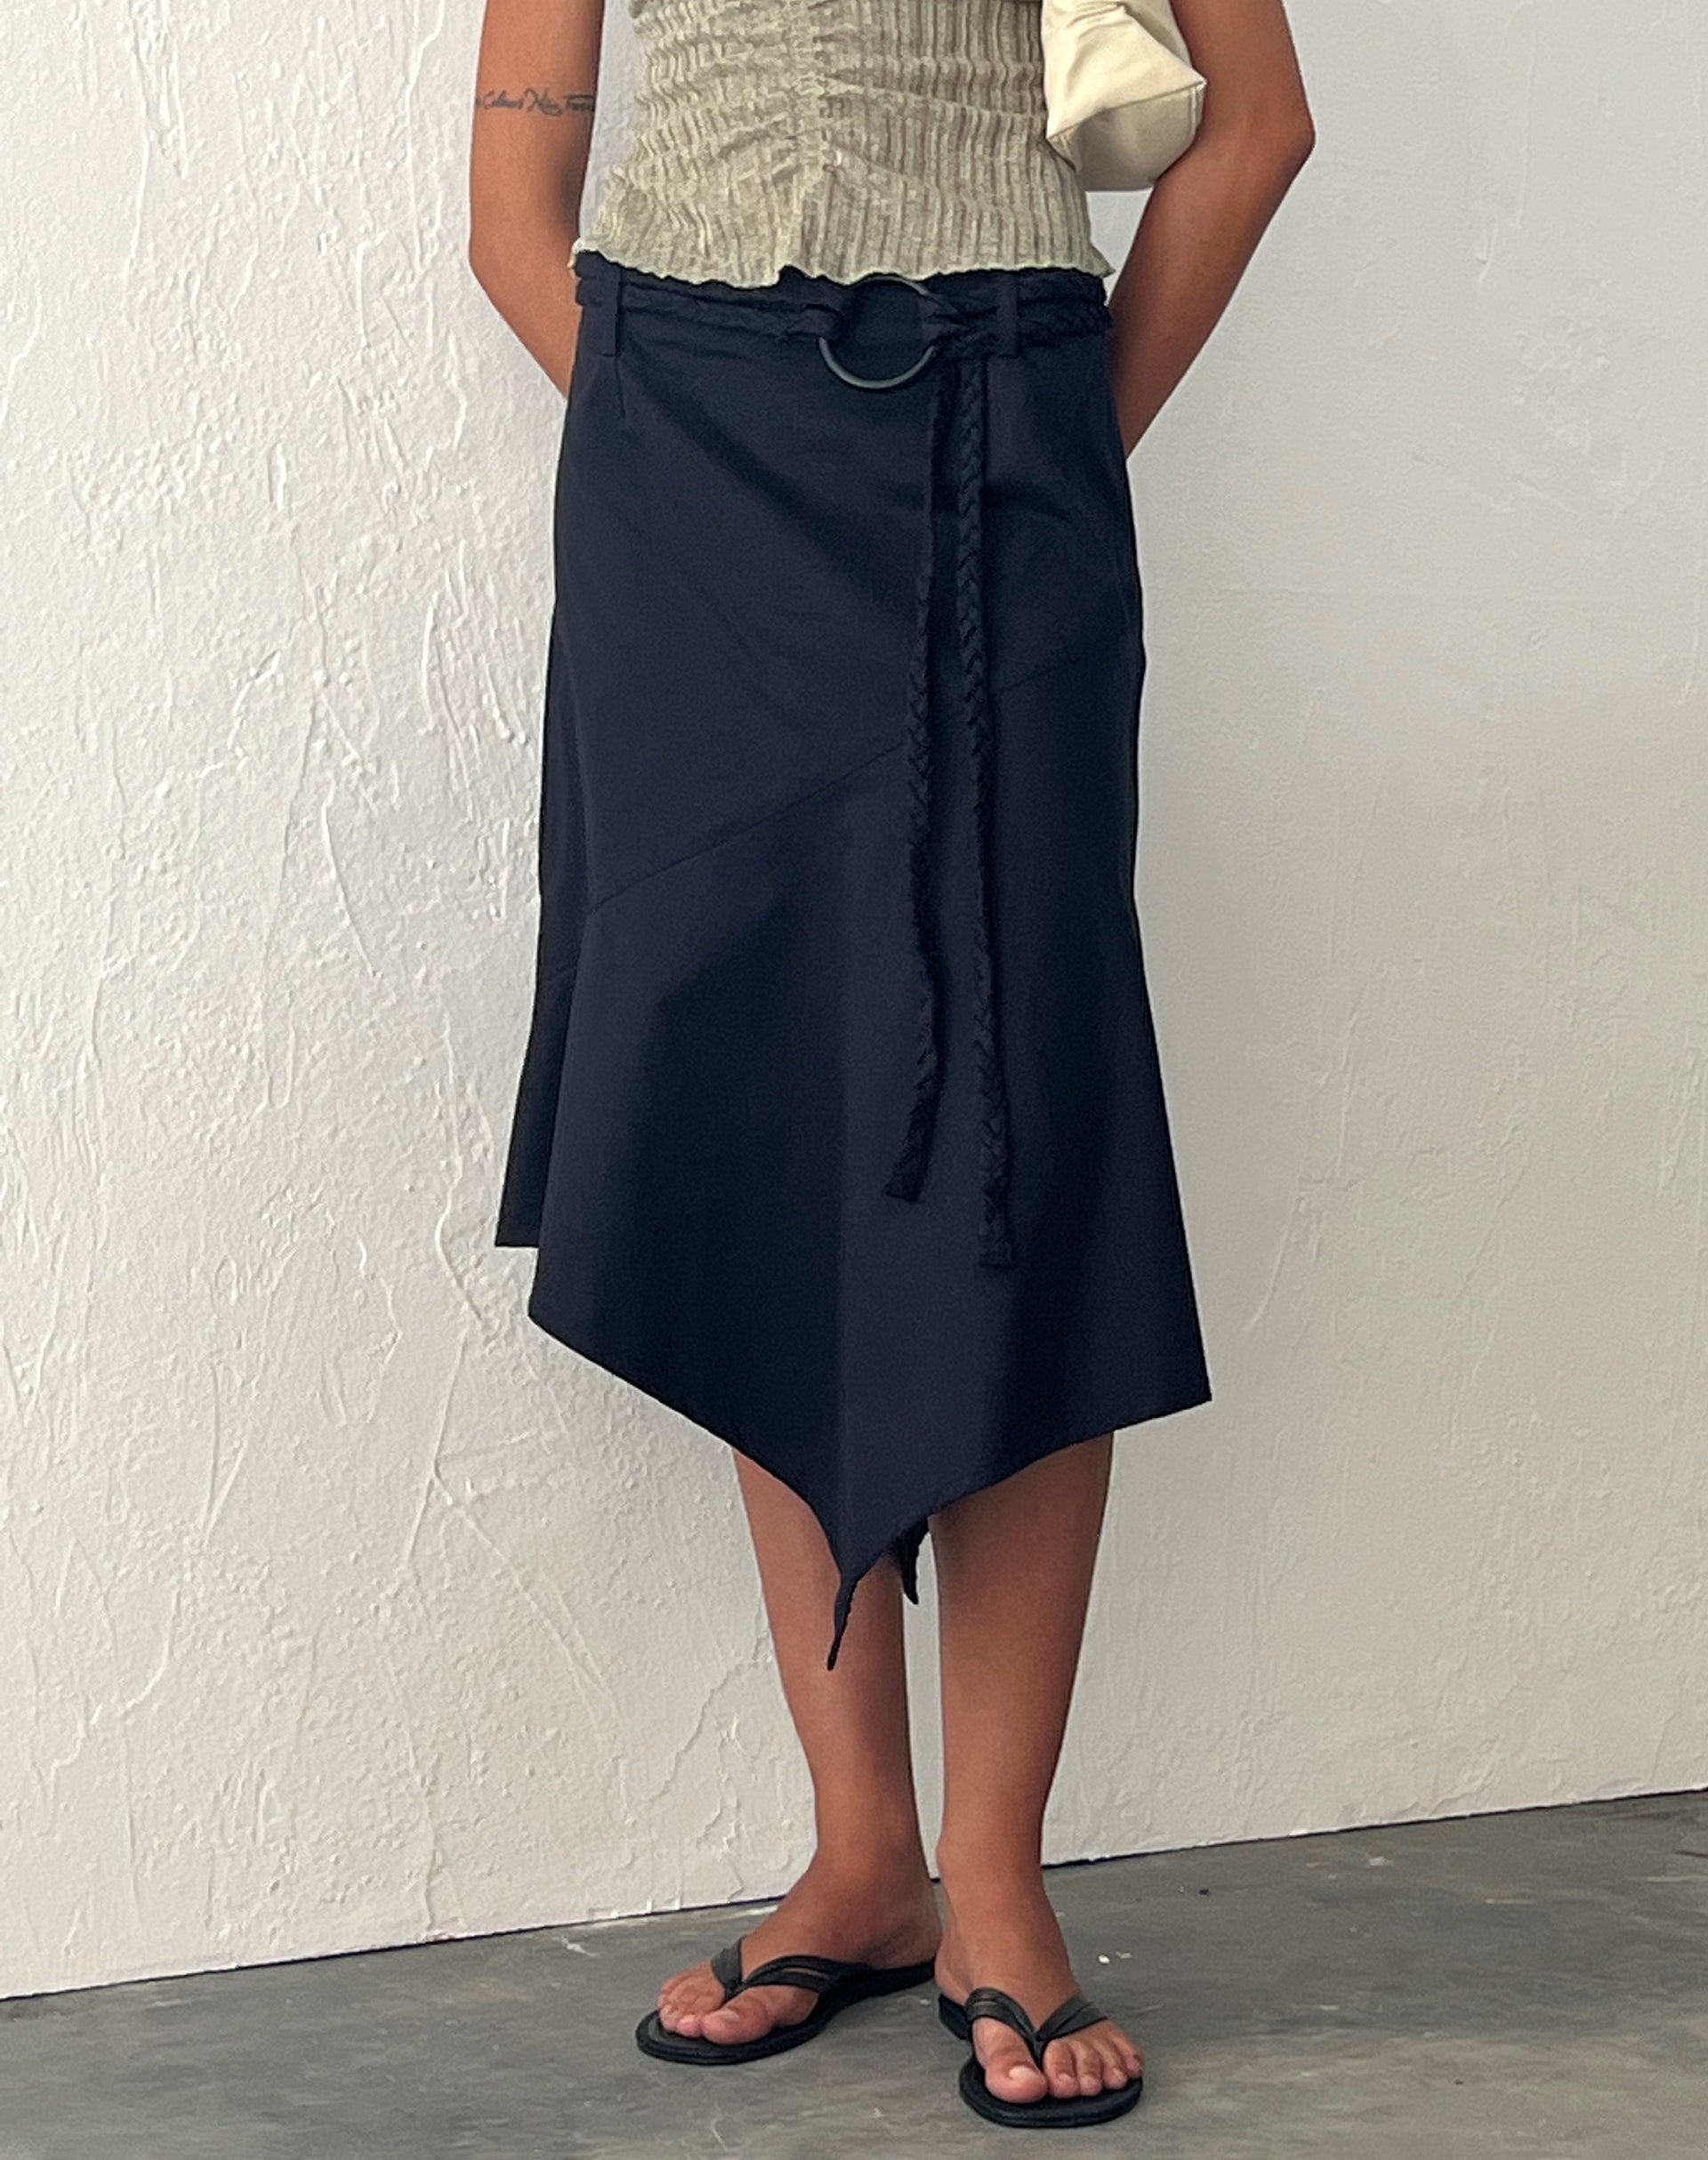 Imagen de Nejusi Falda midi asimétrica negra con cinturón trenzado